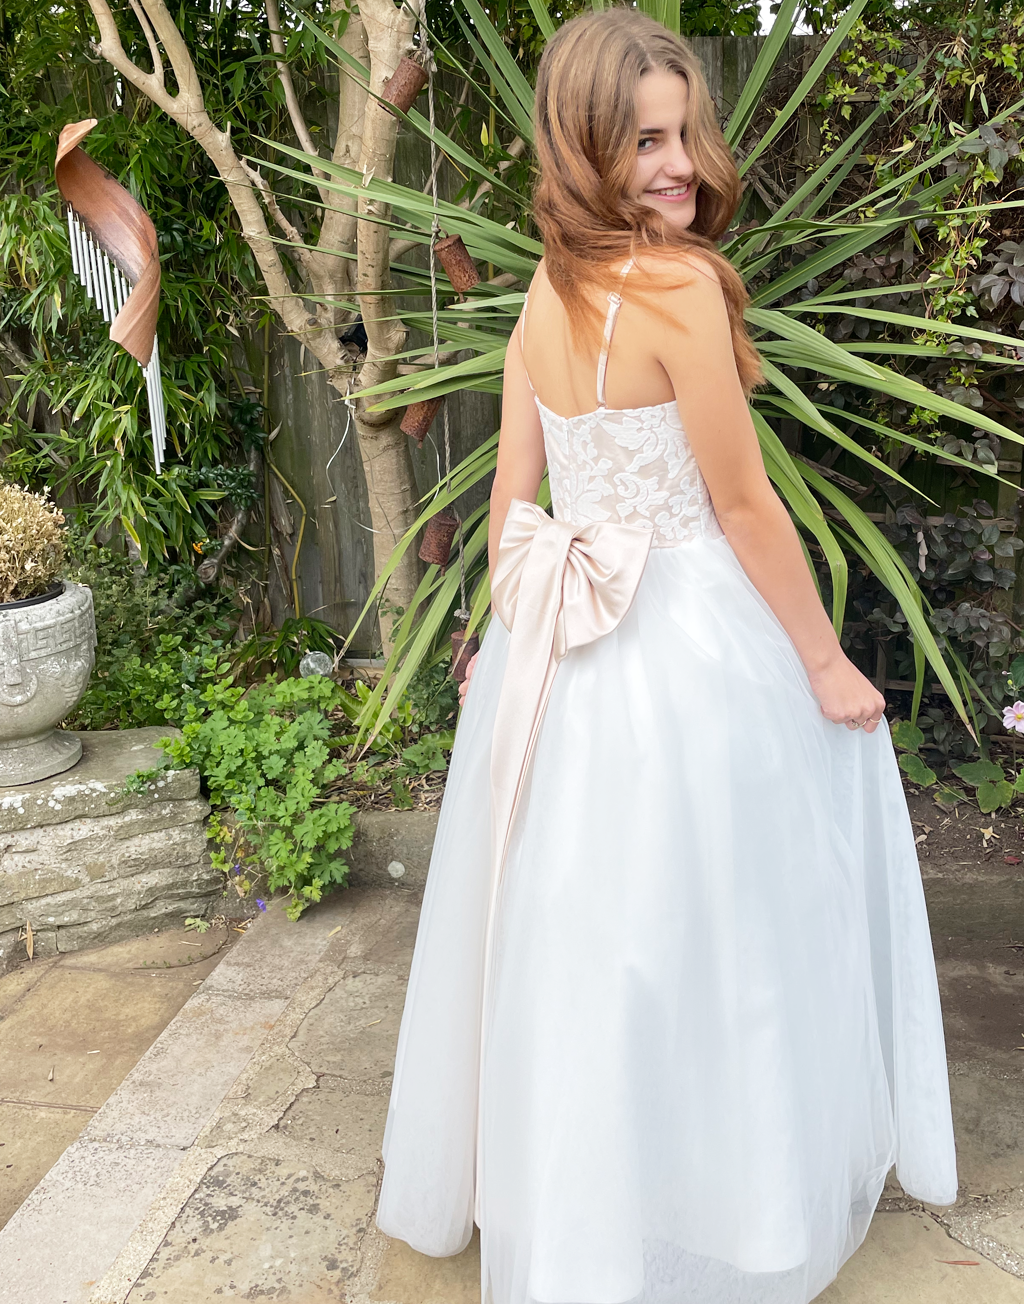 Maryanne in Ivory + Blush - Junior Bridesmaid Dress (Twin Range)